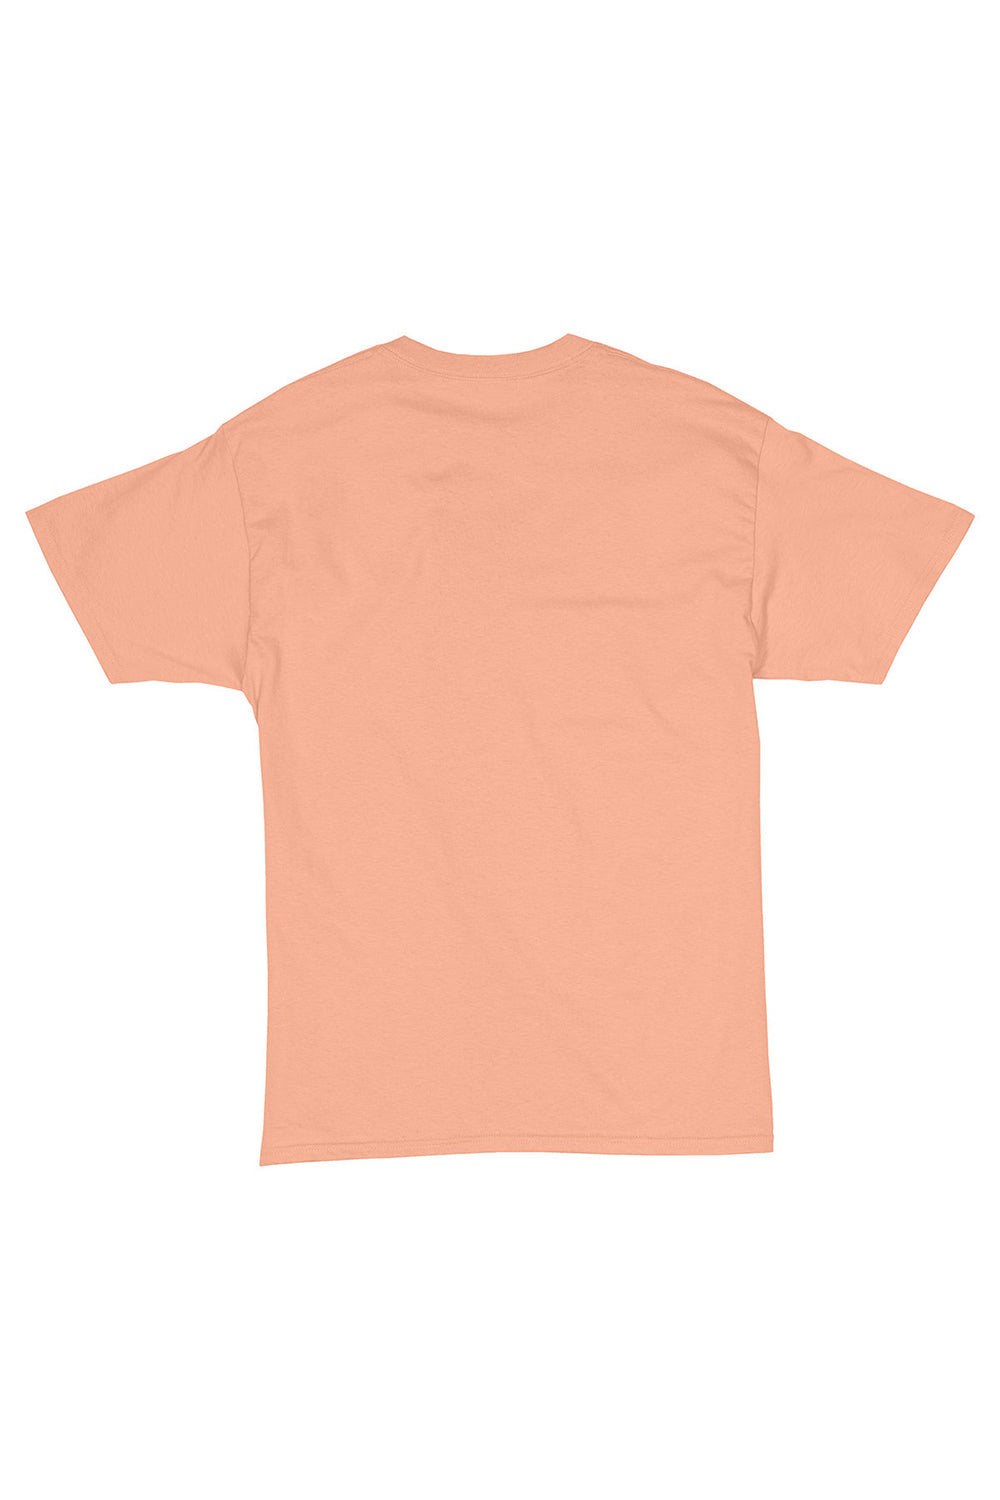 Hanes 5280 Mens ComfortSoft Short Sleeve Crewneck T-Shirt Candy Orange Flat Back